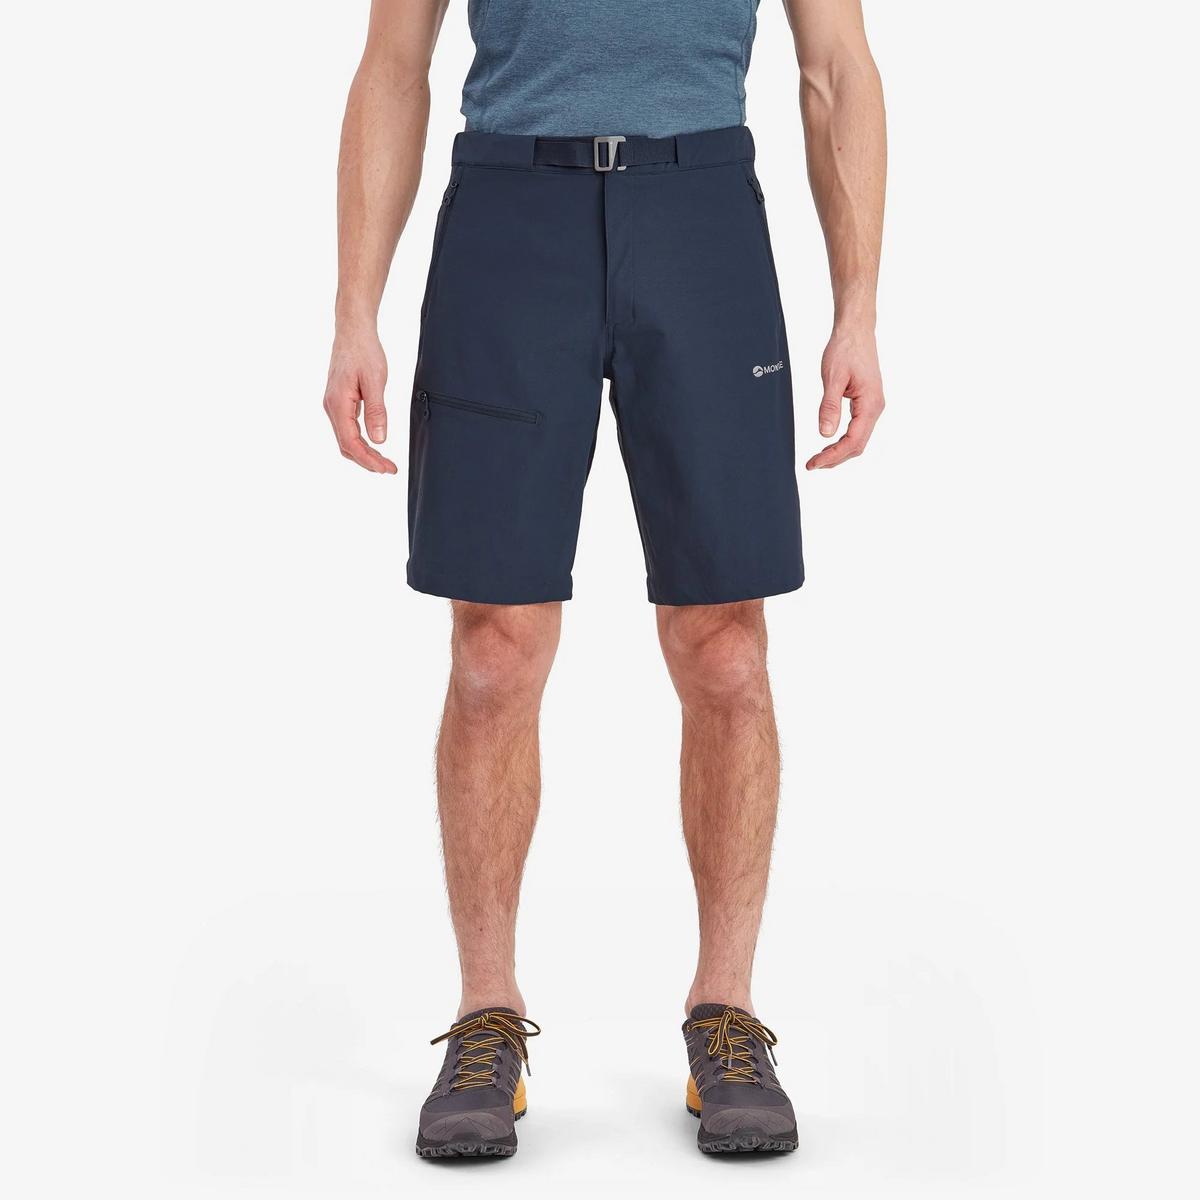 Montane Men's Tenacity Shorts - Eclipse Blue